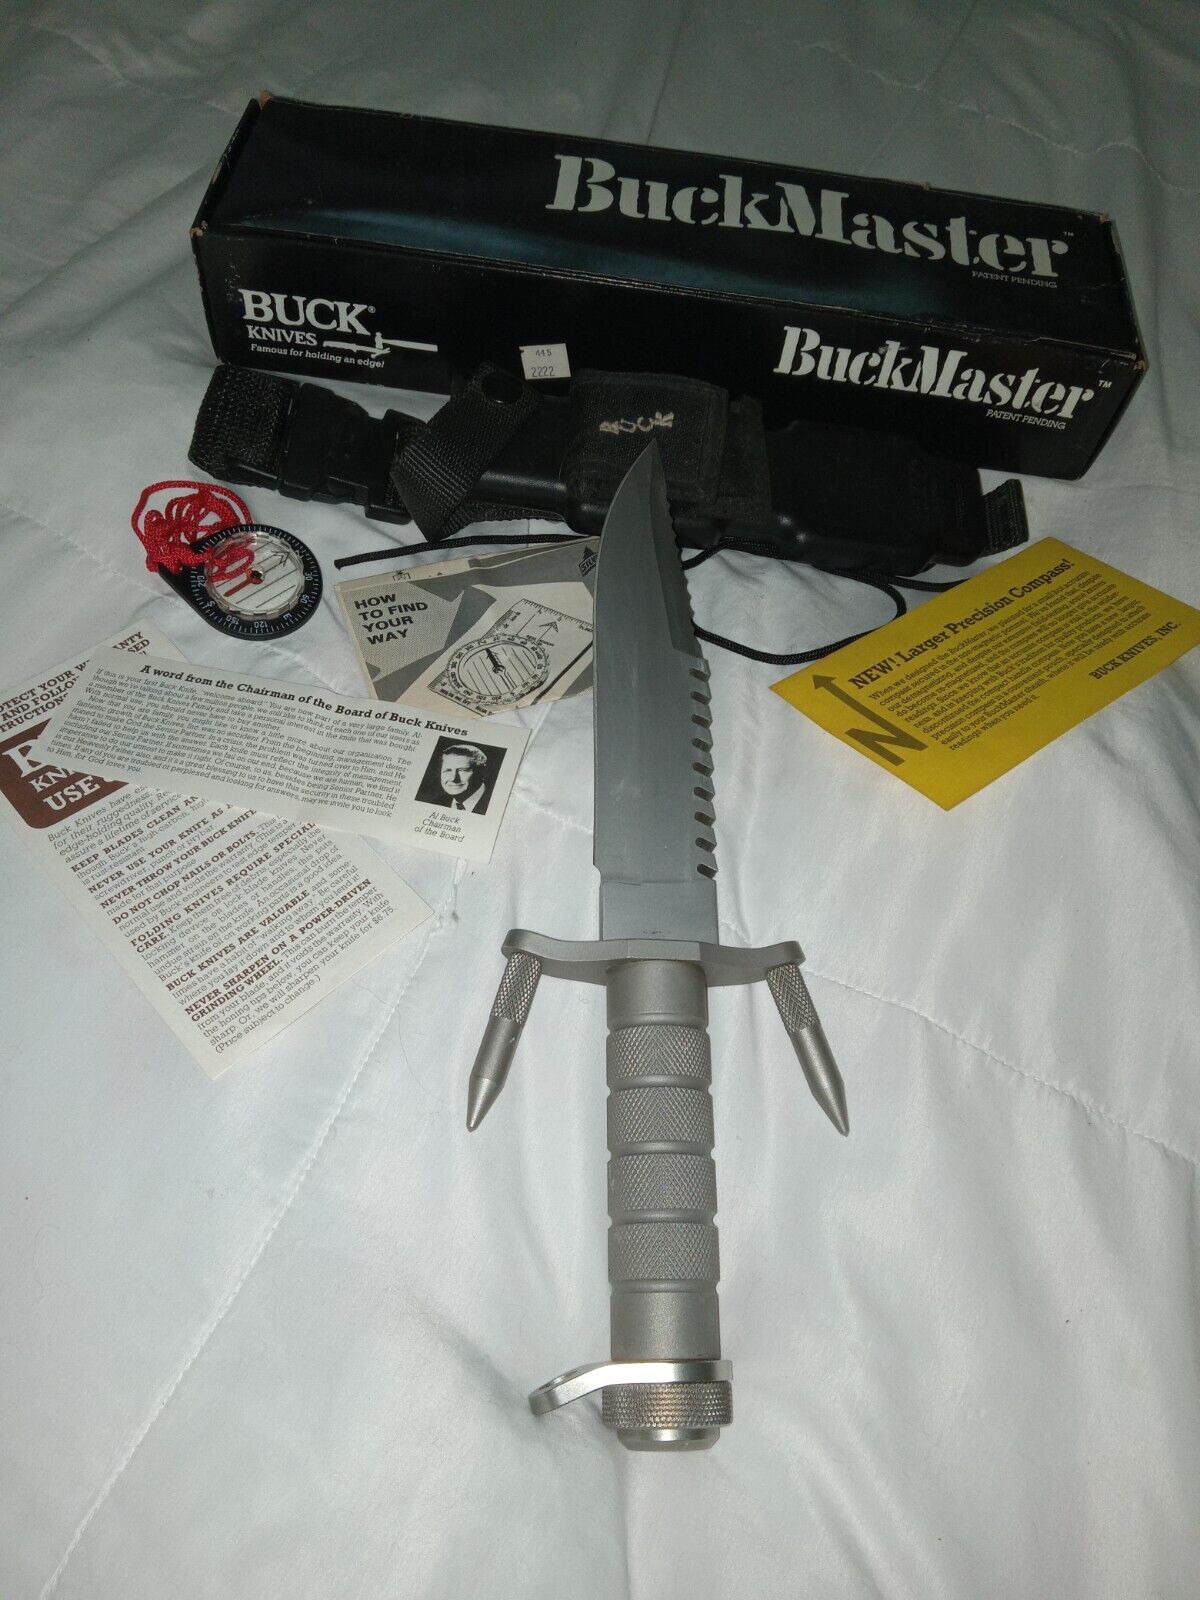 EUC Buck Buckmaster Knife 184 RARE 1985 w/ Sheath Box Contents AS PICTURED